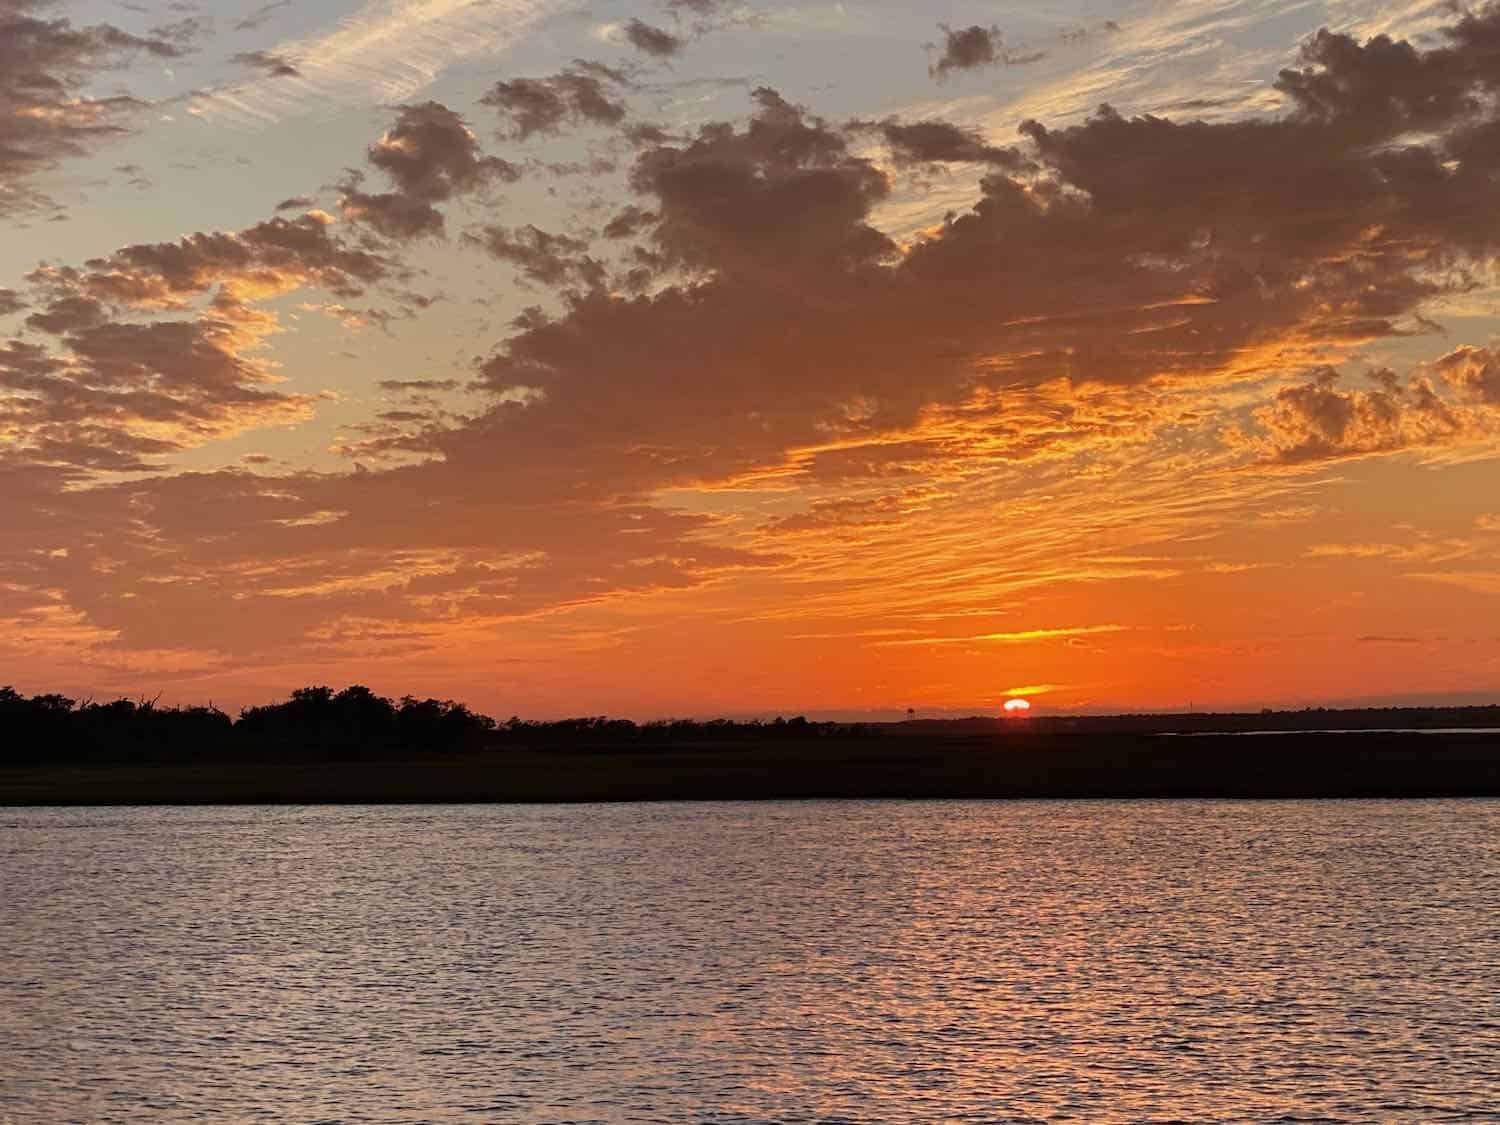 orange sunset over the water on the Onslow County coast of North Carolina.